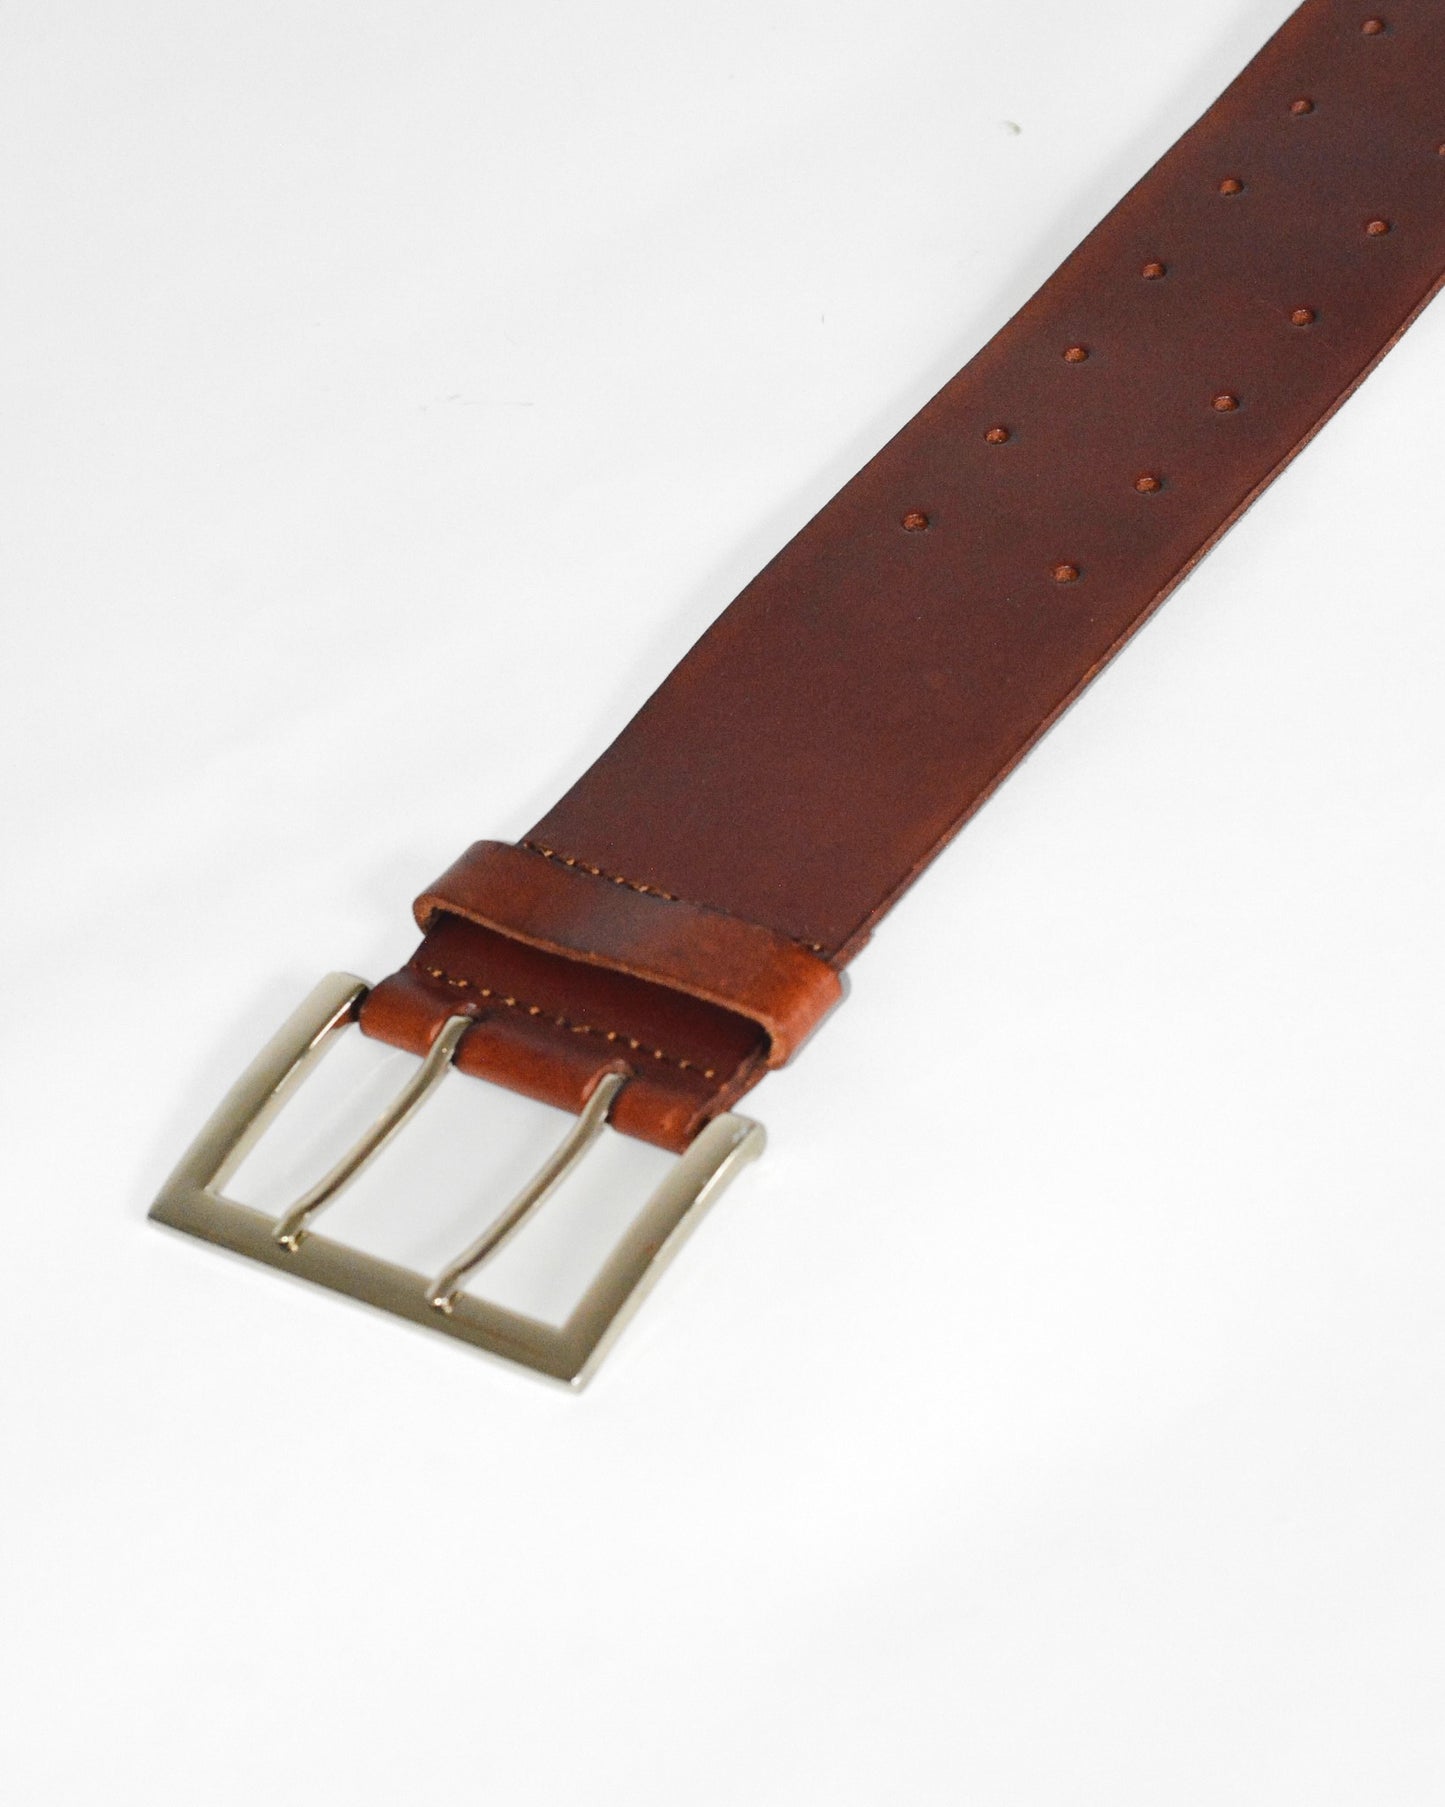 Brown Leather Wide Belt (M-L)